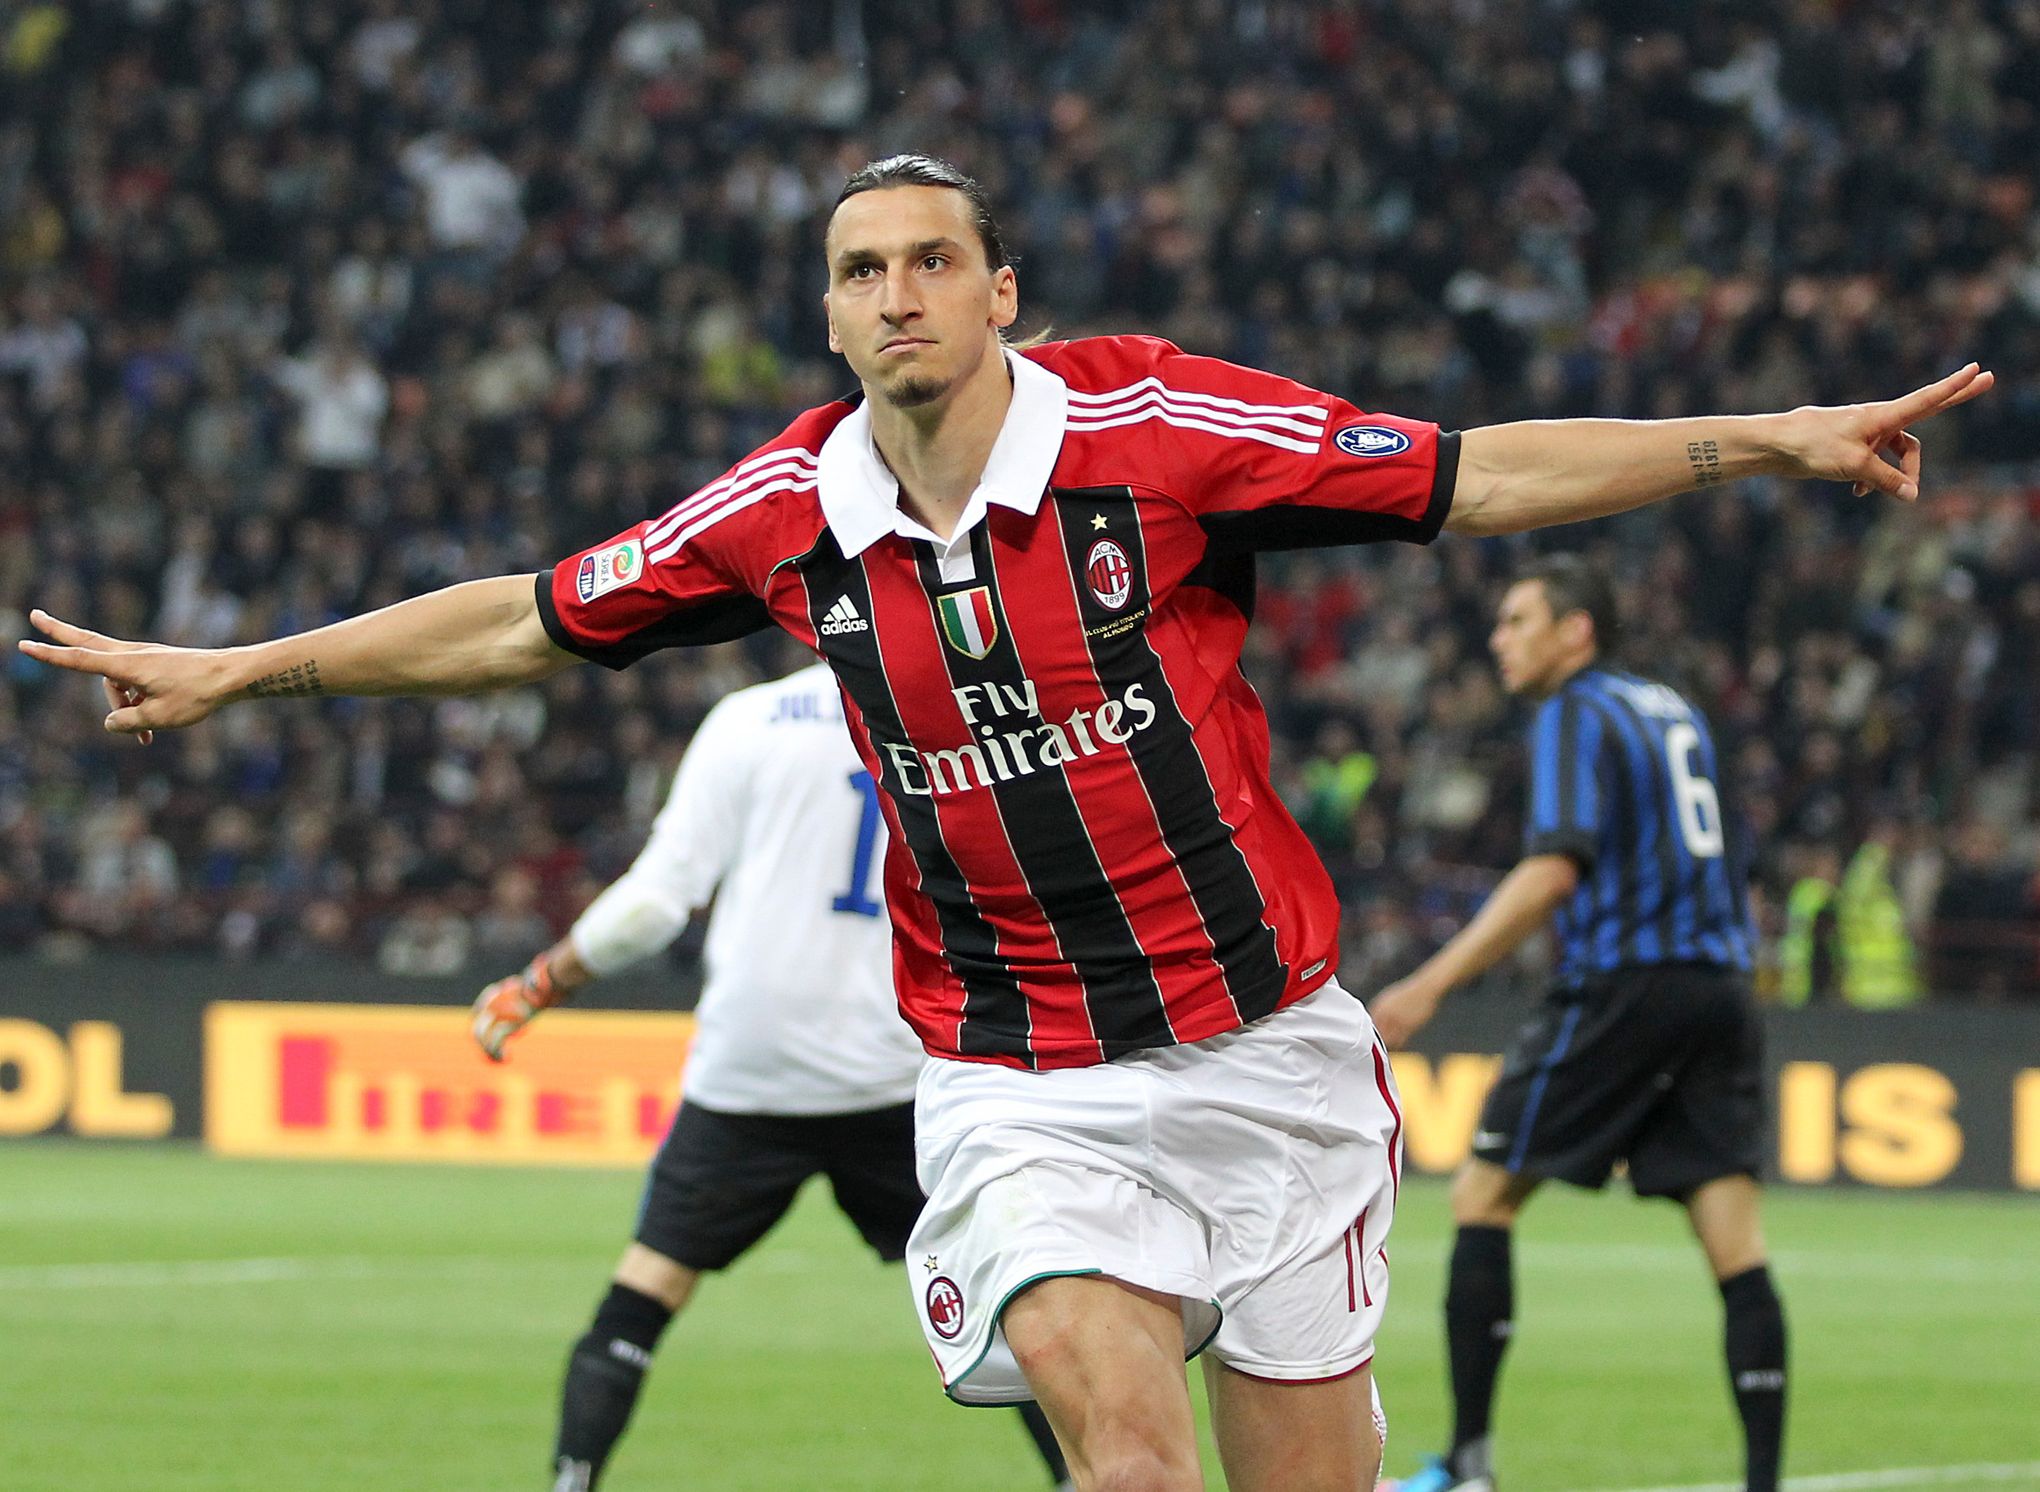 Club: AC Milan